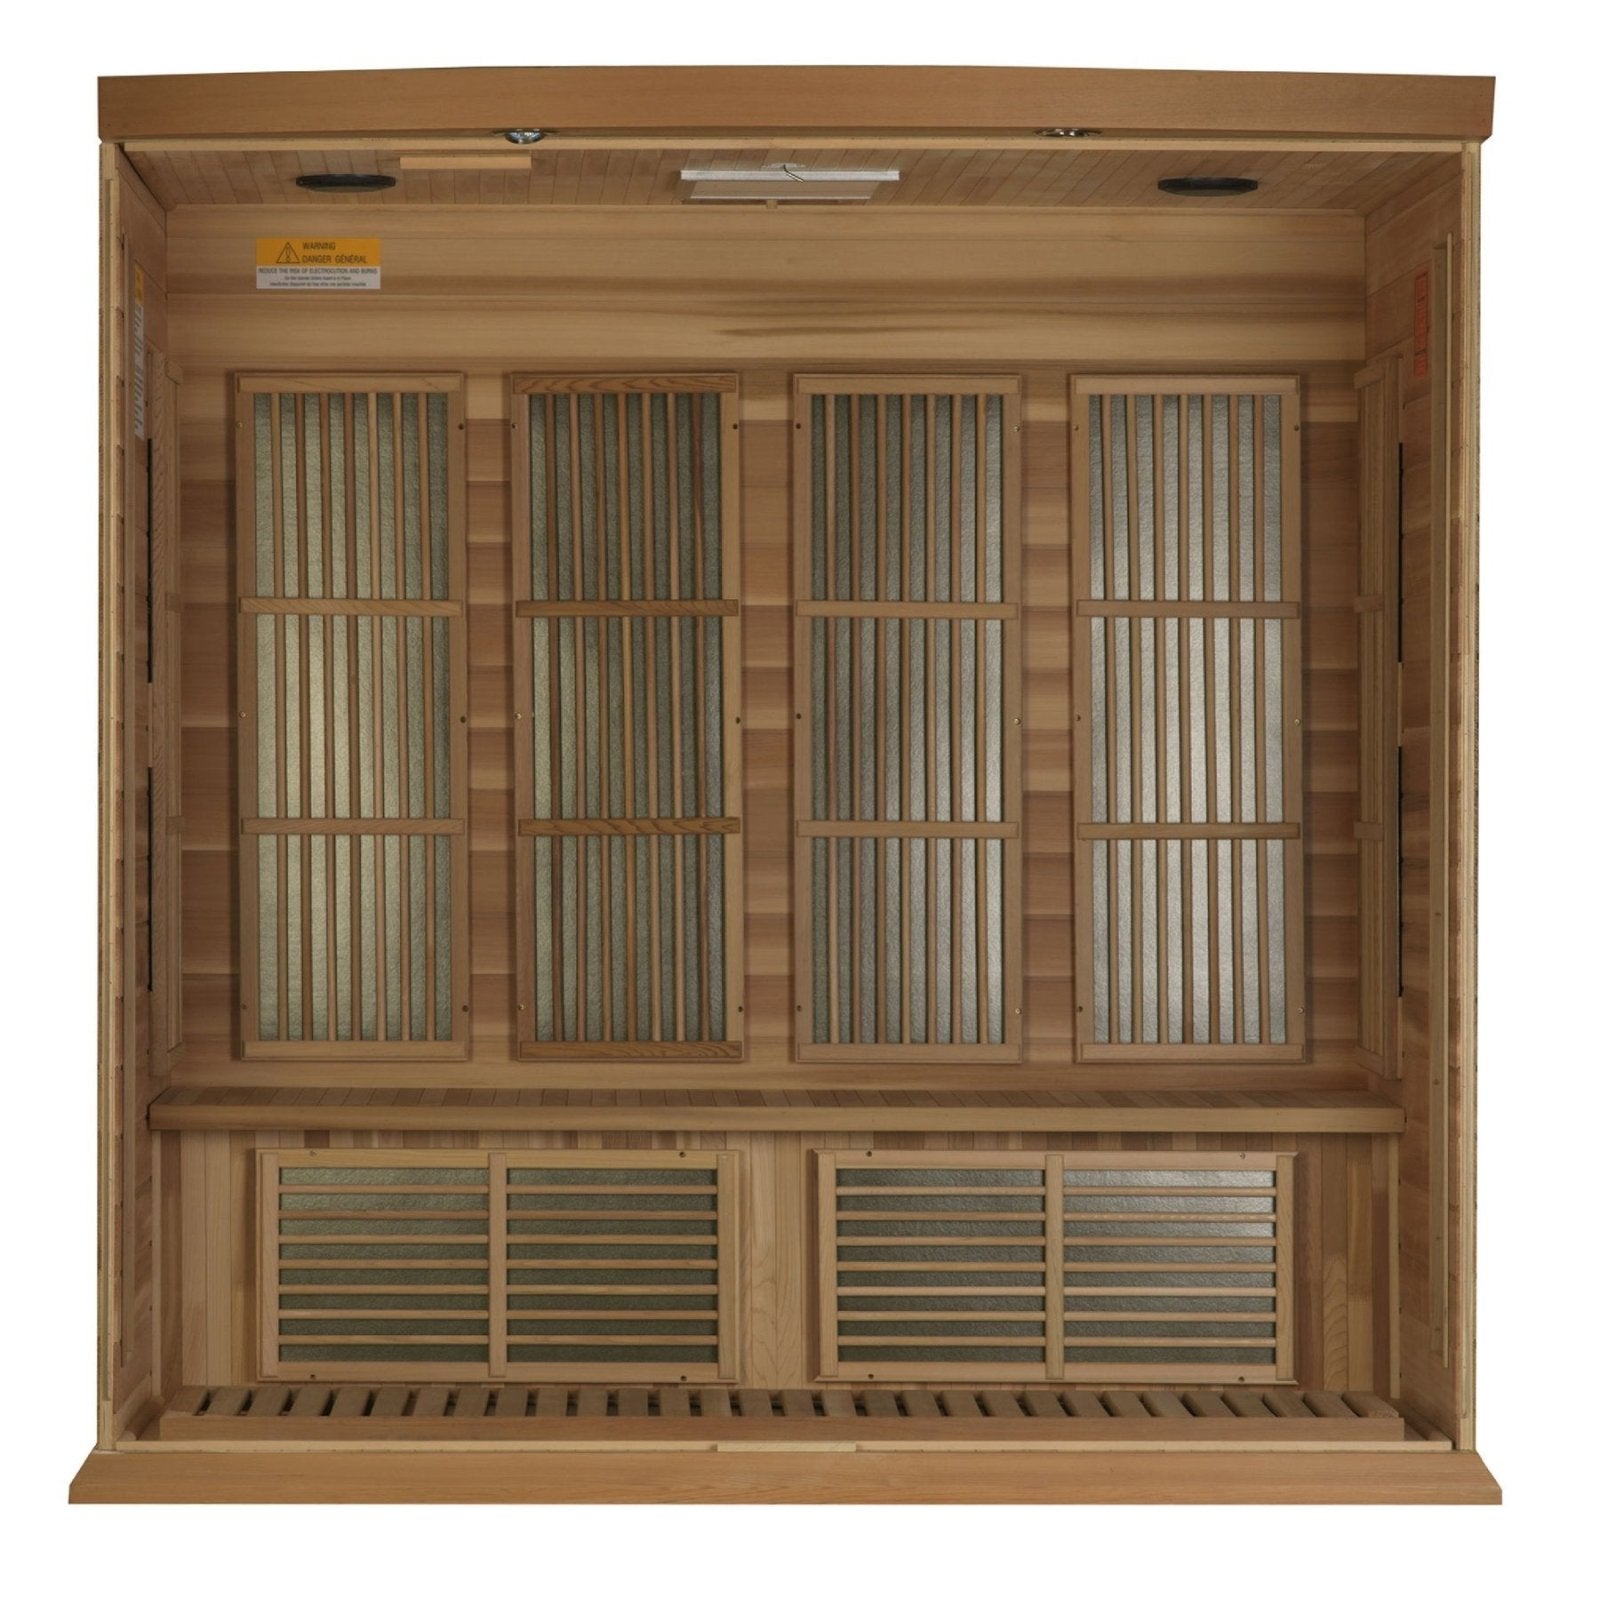 Golden Design Low EMF 4-Person Maxxus FAR Infrared Sauna with Hemlock Wood | Model: MX-K406-01 - MX-K406-01